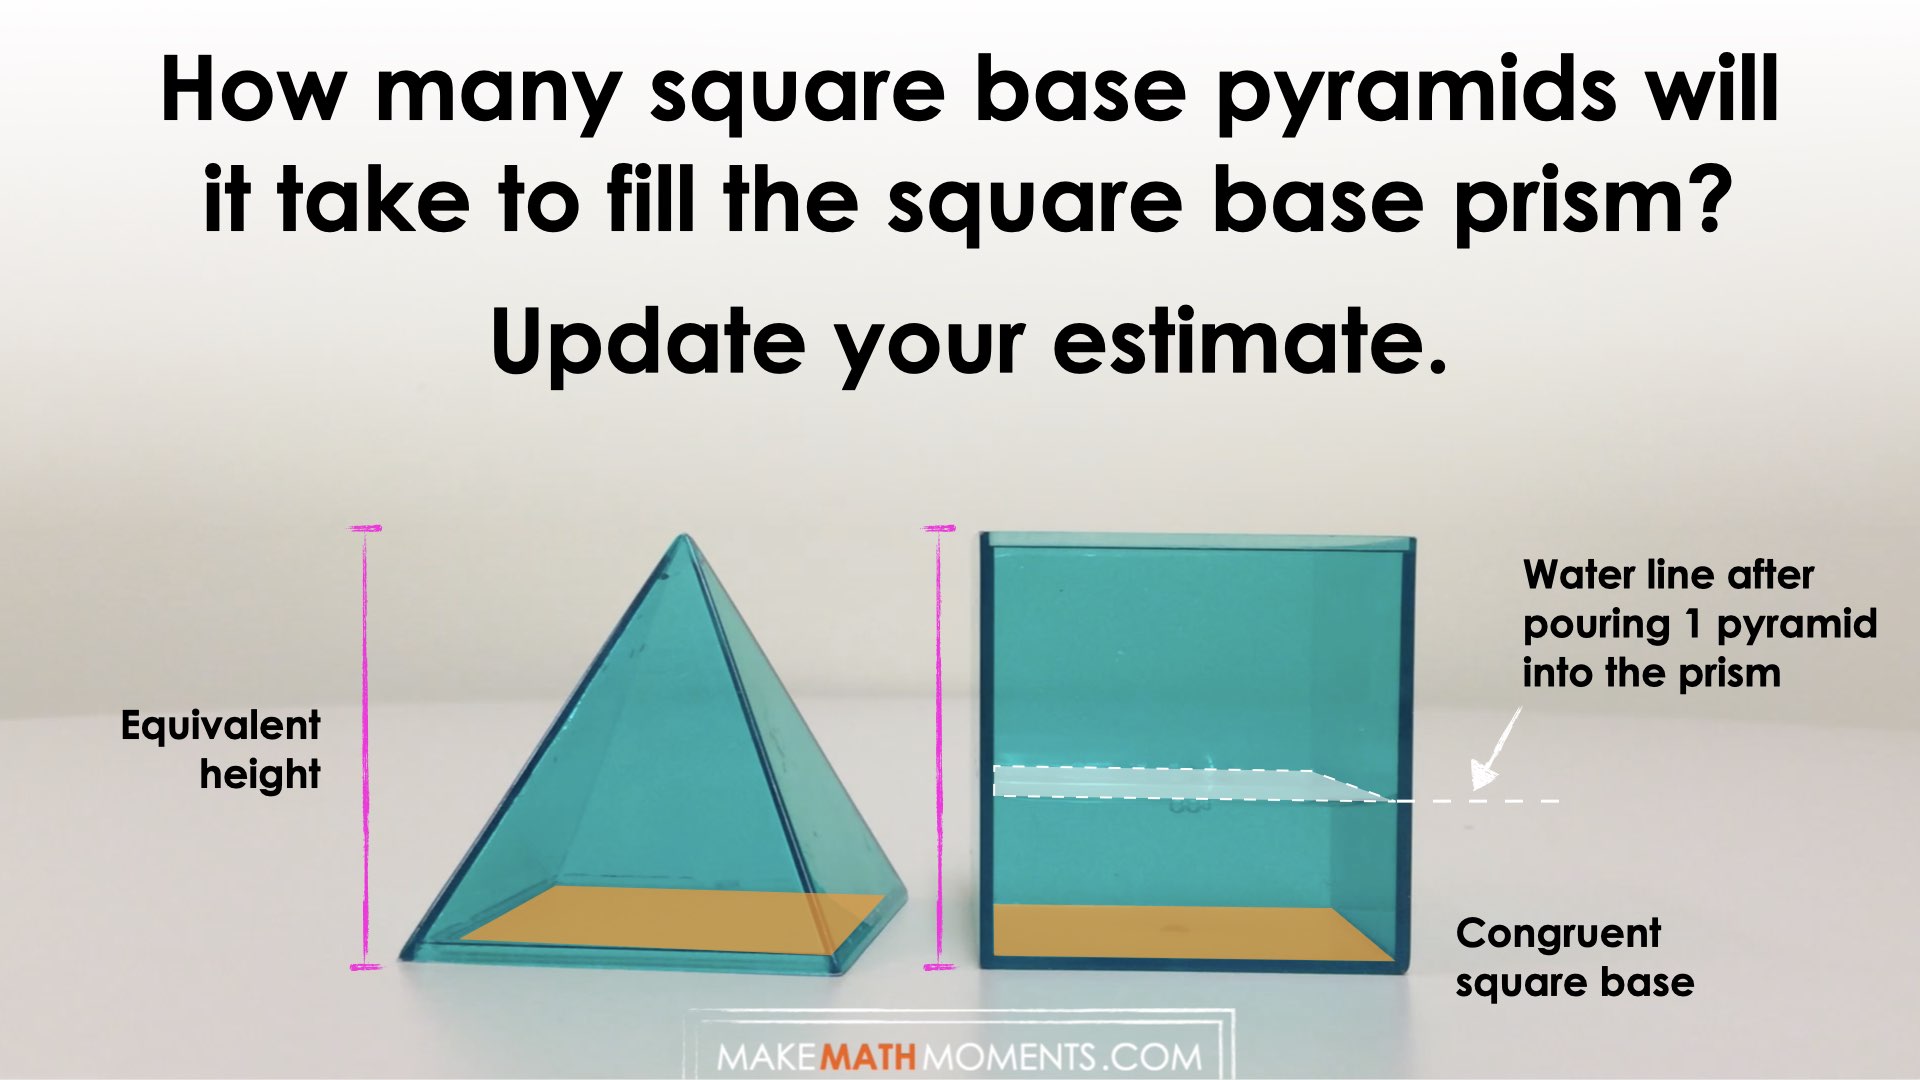 pyramids and square base prism